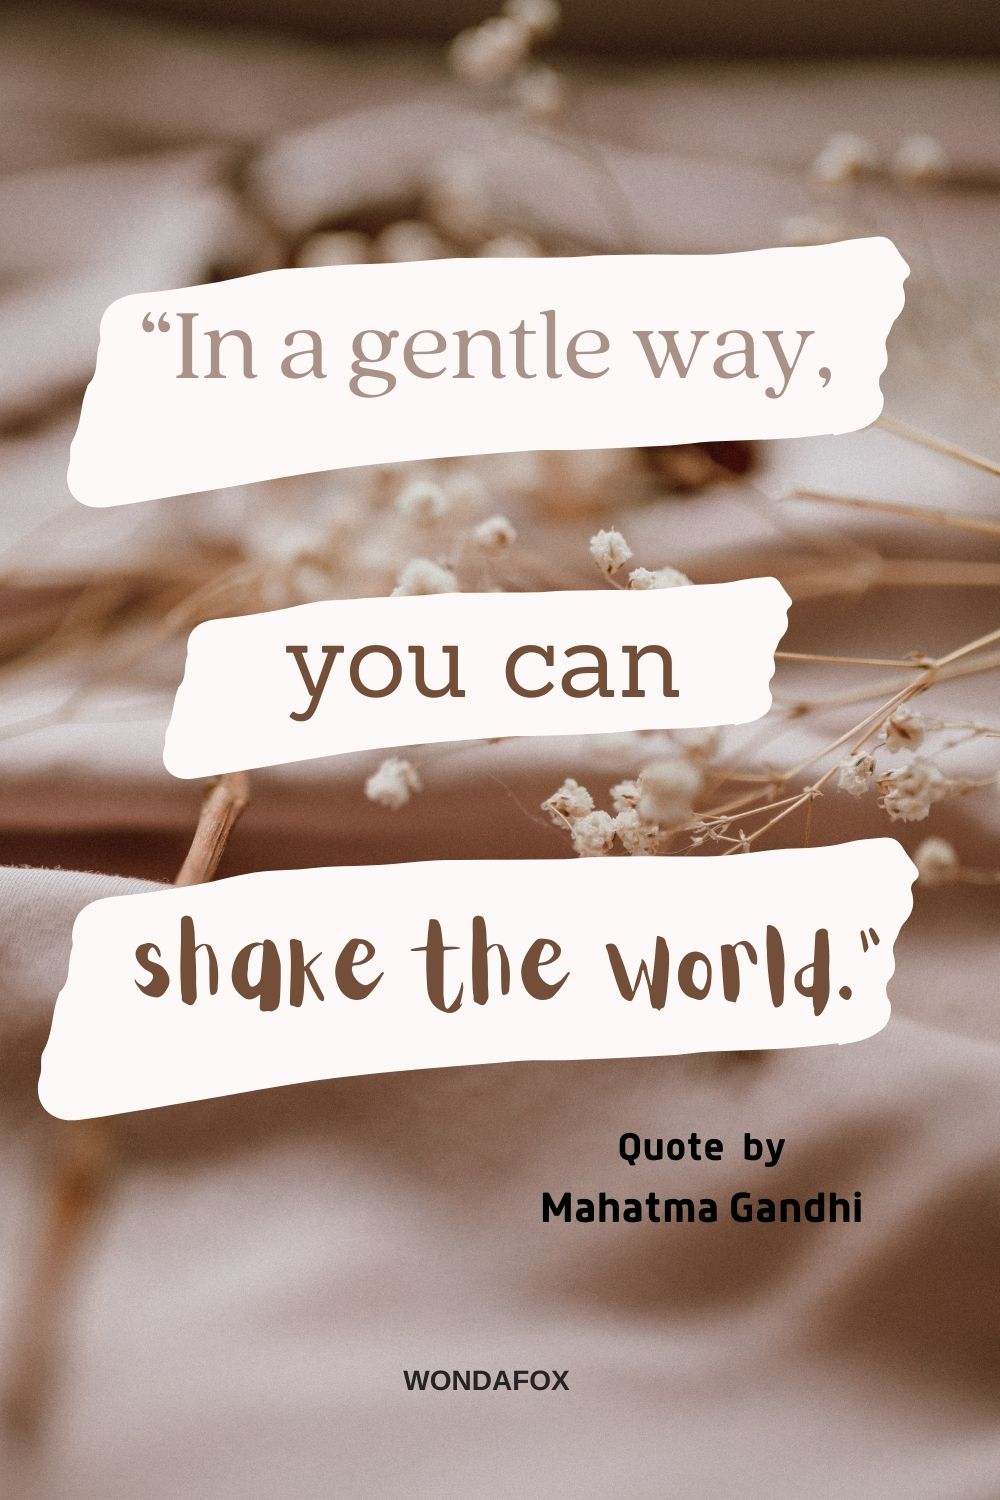 “In a gentle way, you can shake the world.”
Mahatma Gandhi